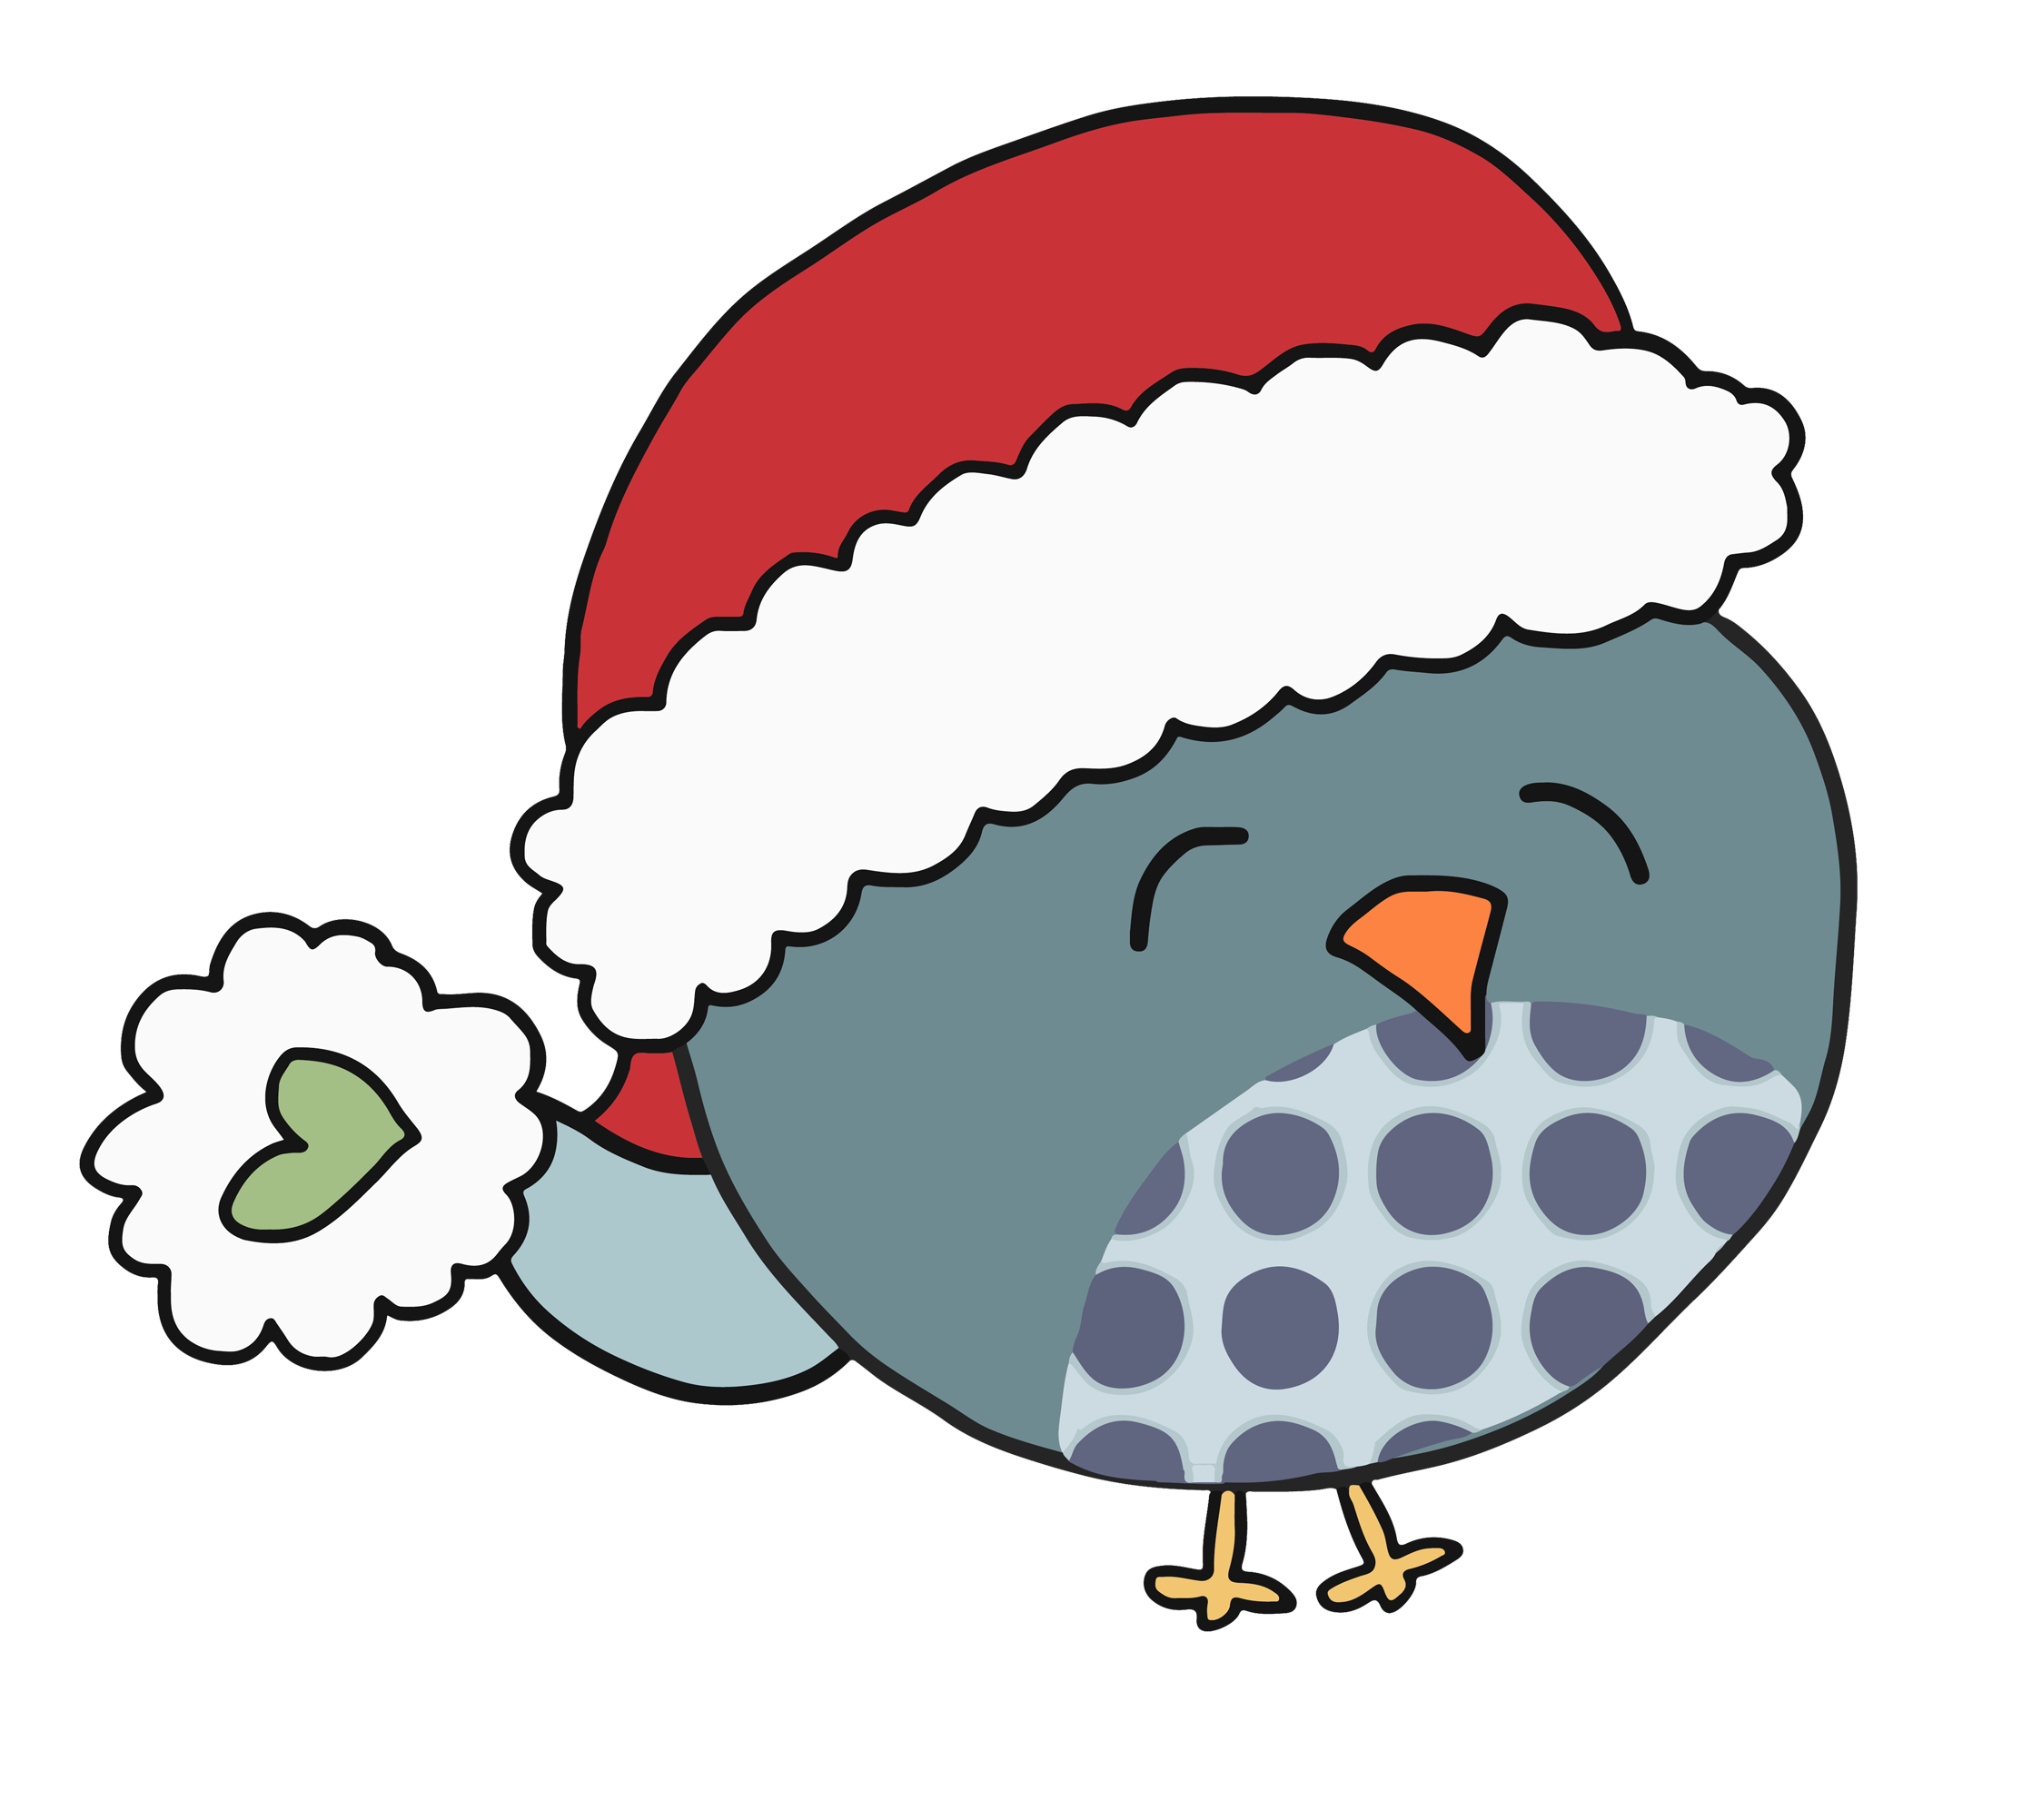 Christmas bird